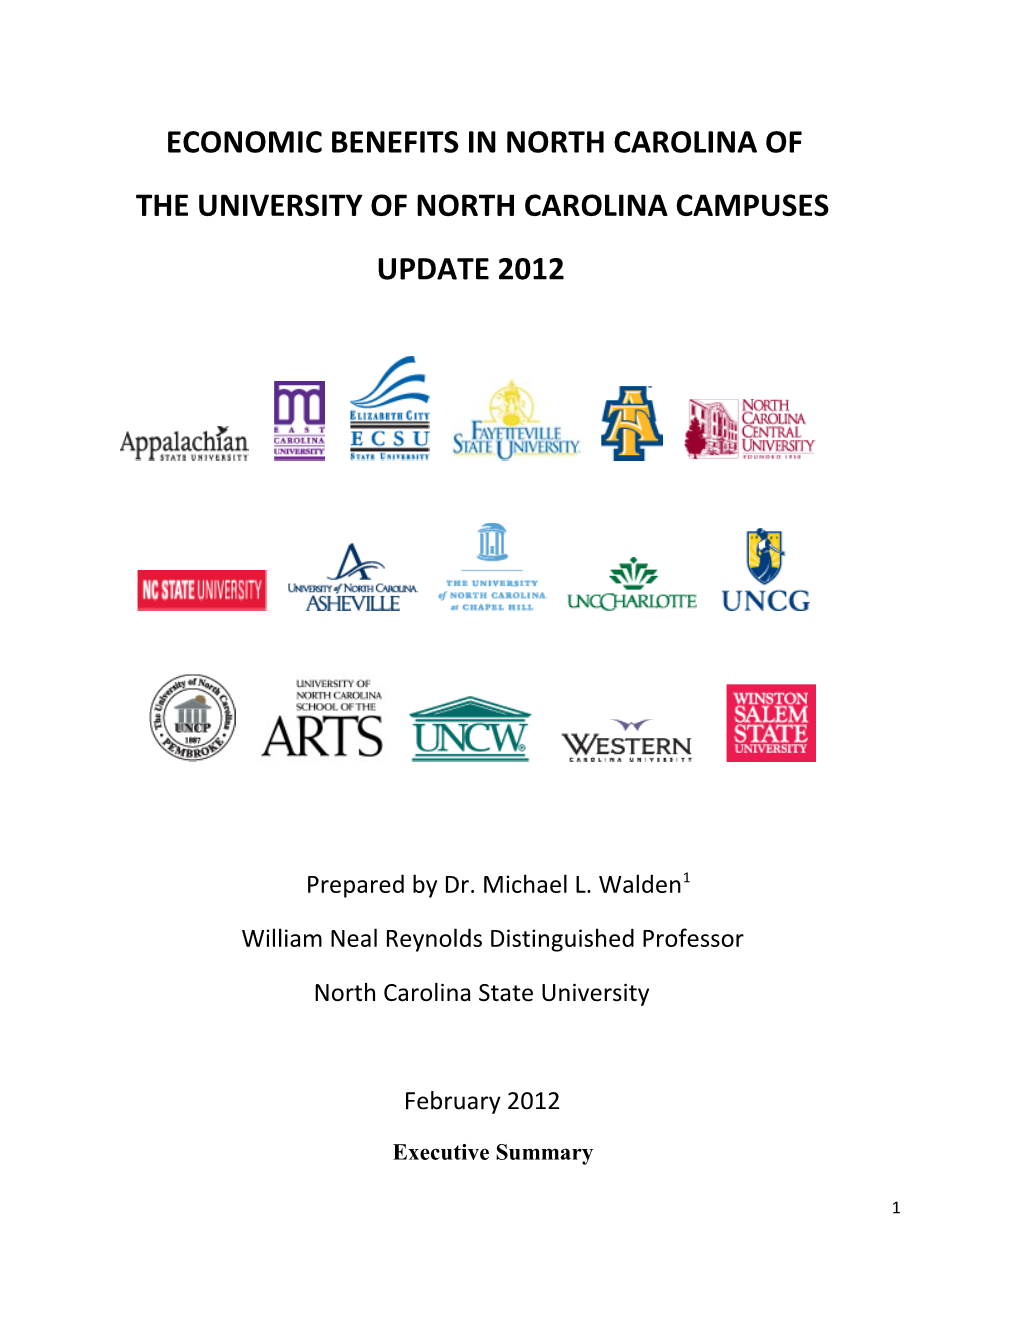 The University of North Carolina Campuses